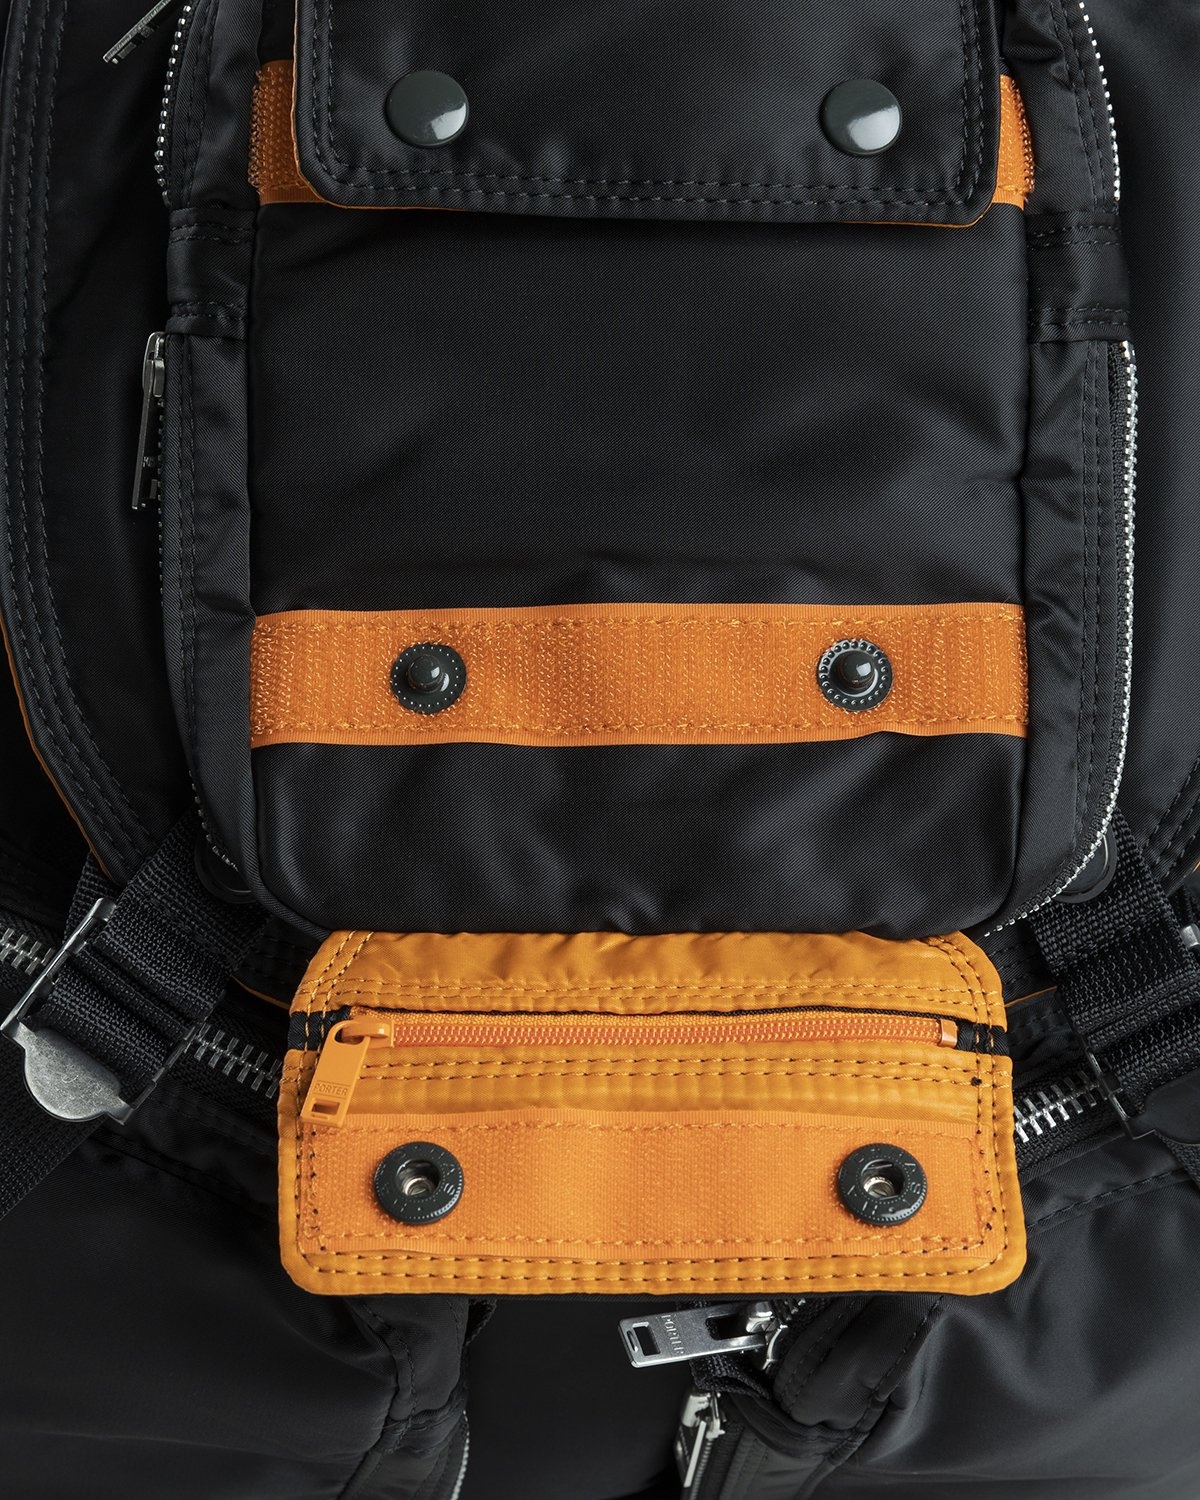 Porter-Yoshida & Co. – Rucksack Black - Backpacks - Black - Image 4